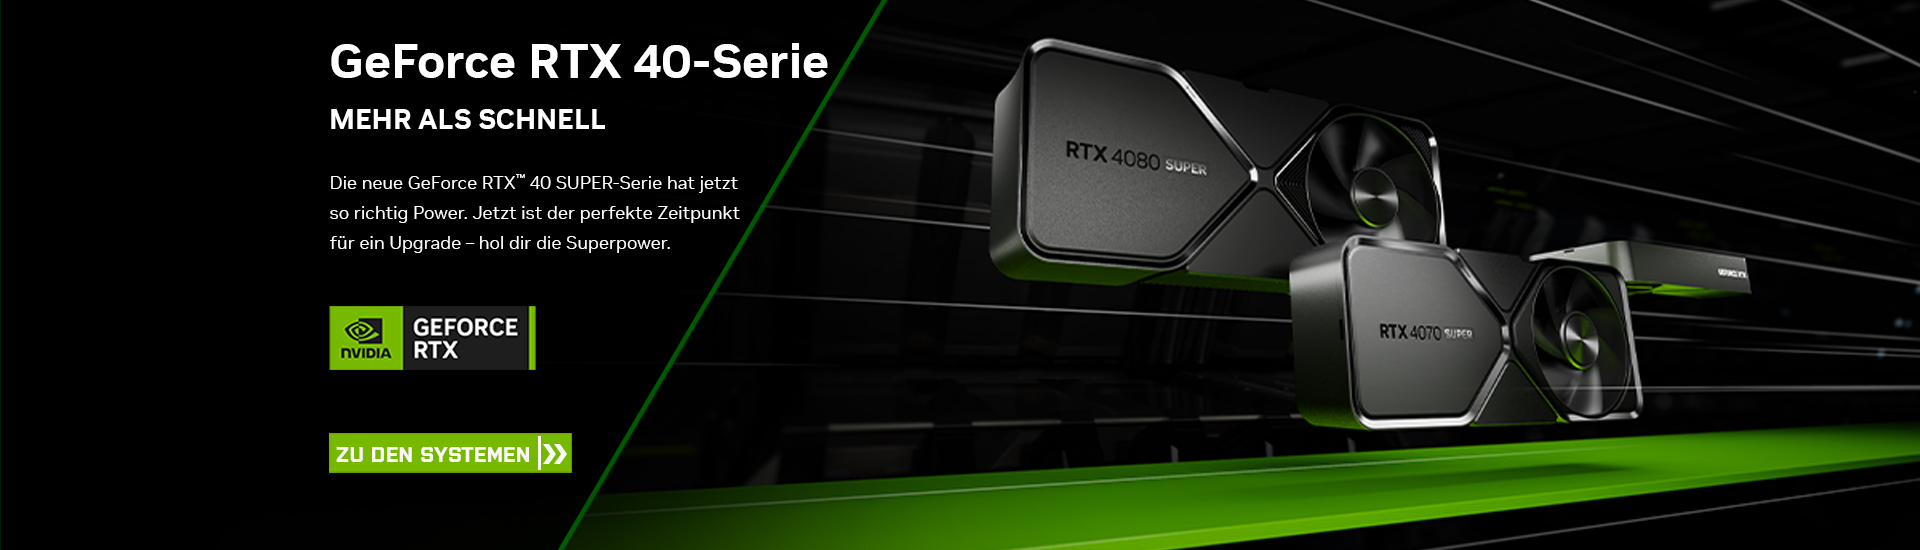 Nvidia RTX 40 Super Serie